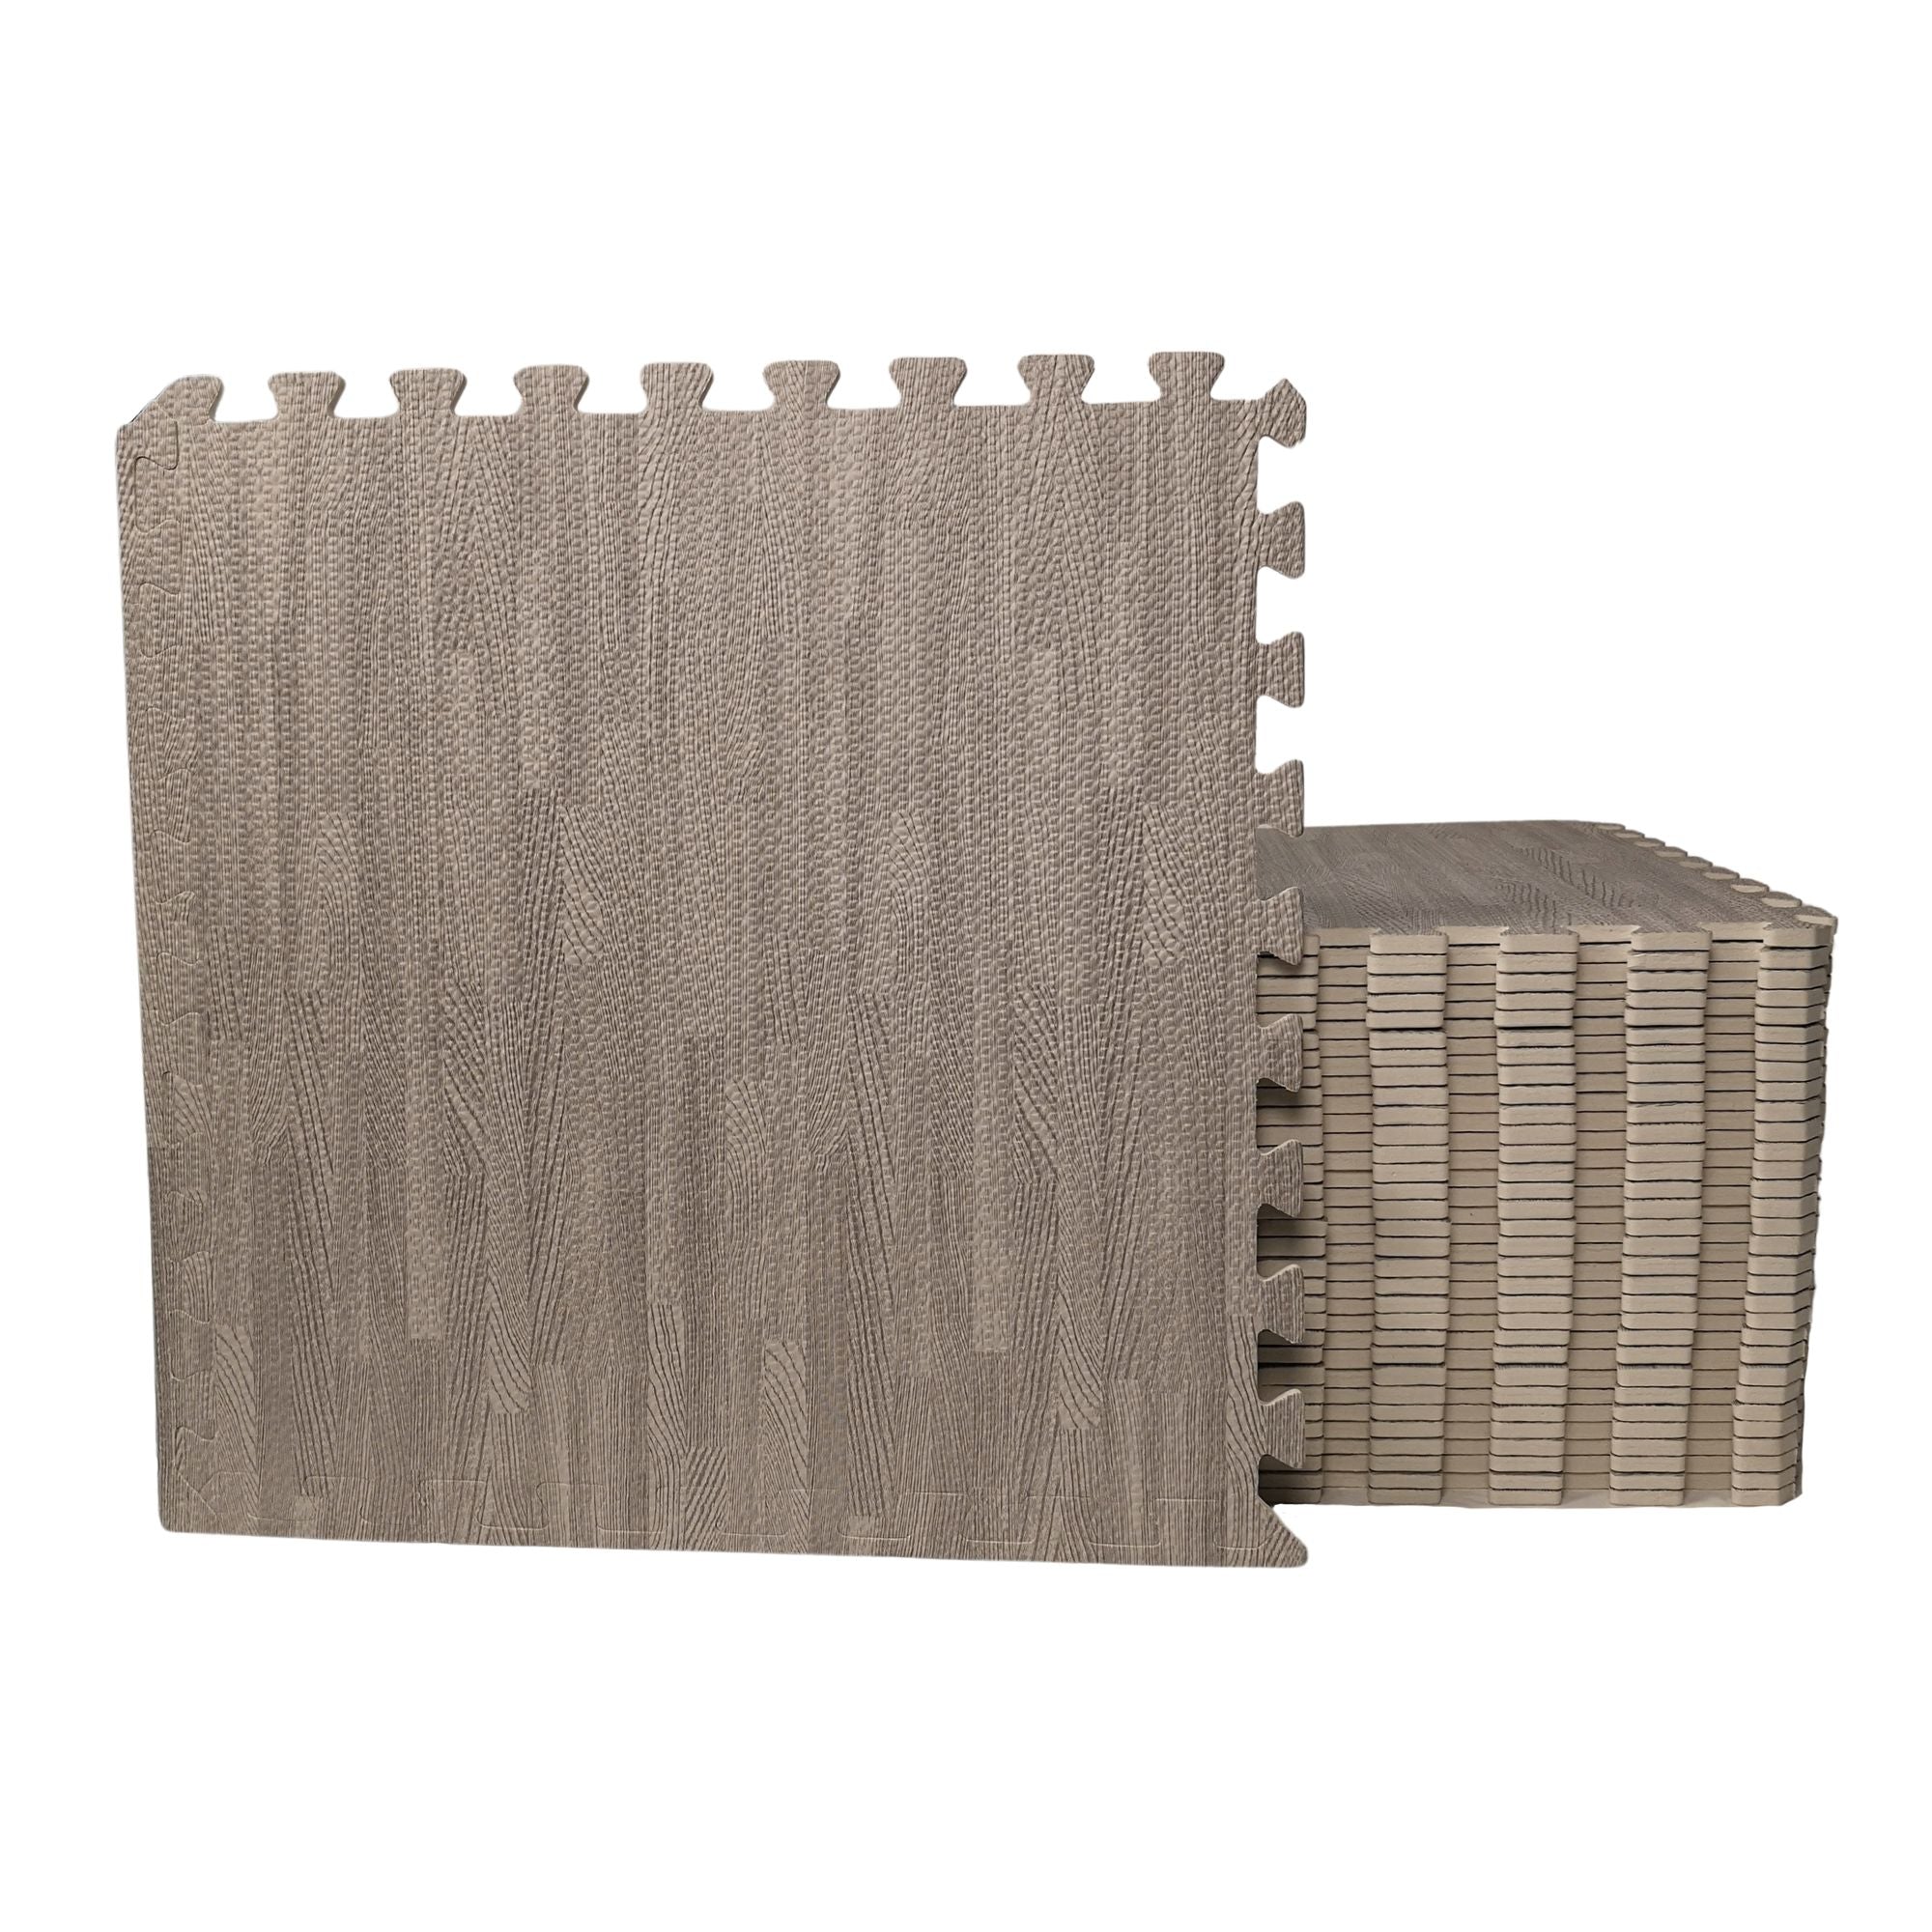 32 Piece Grey Wood Effect EVA Foam Floor Protective Floor Tiles / Mats 60x60cm Each Set For Gyms, Kitchens, Garages, Camping, Kids Play Matting, Floor Mats Set Covers 11.52 sqm (124 sq ft)